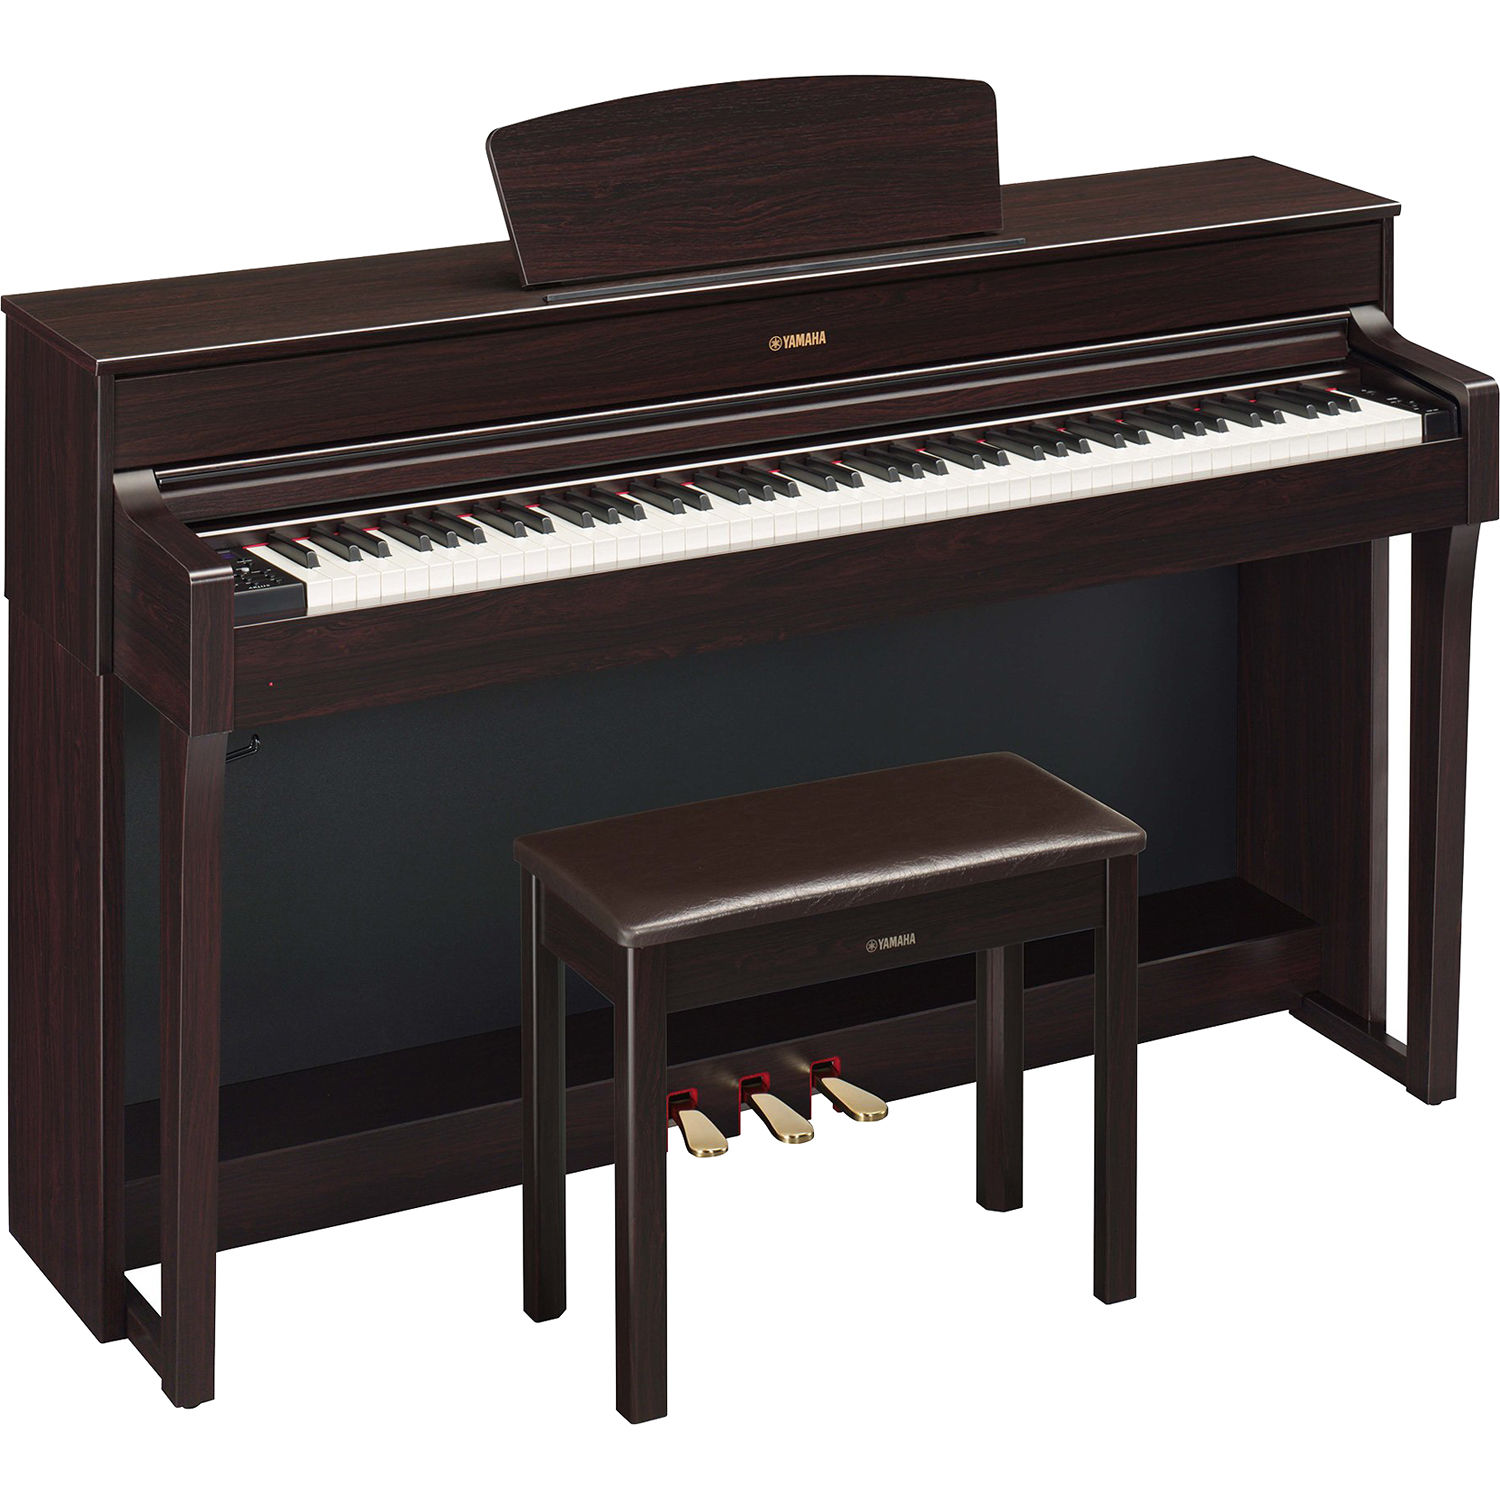 Piano Digital de Consola Yamaha Arius Ydp 184 de 88 Teclas con Banqueta Madera de Palisandro Oscuro